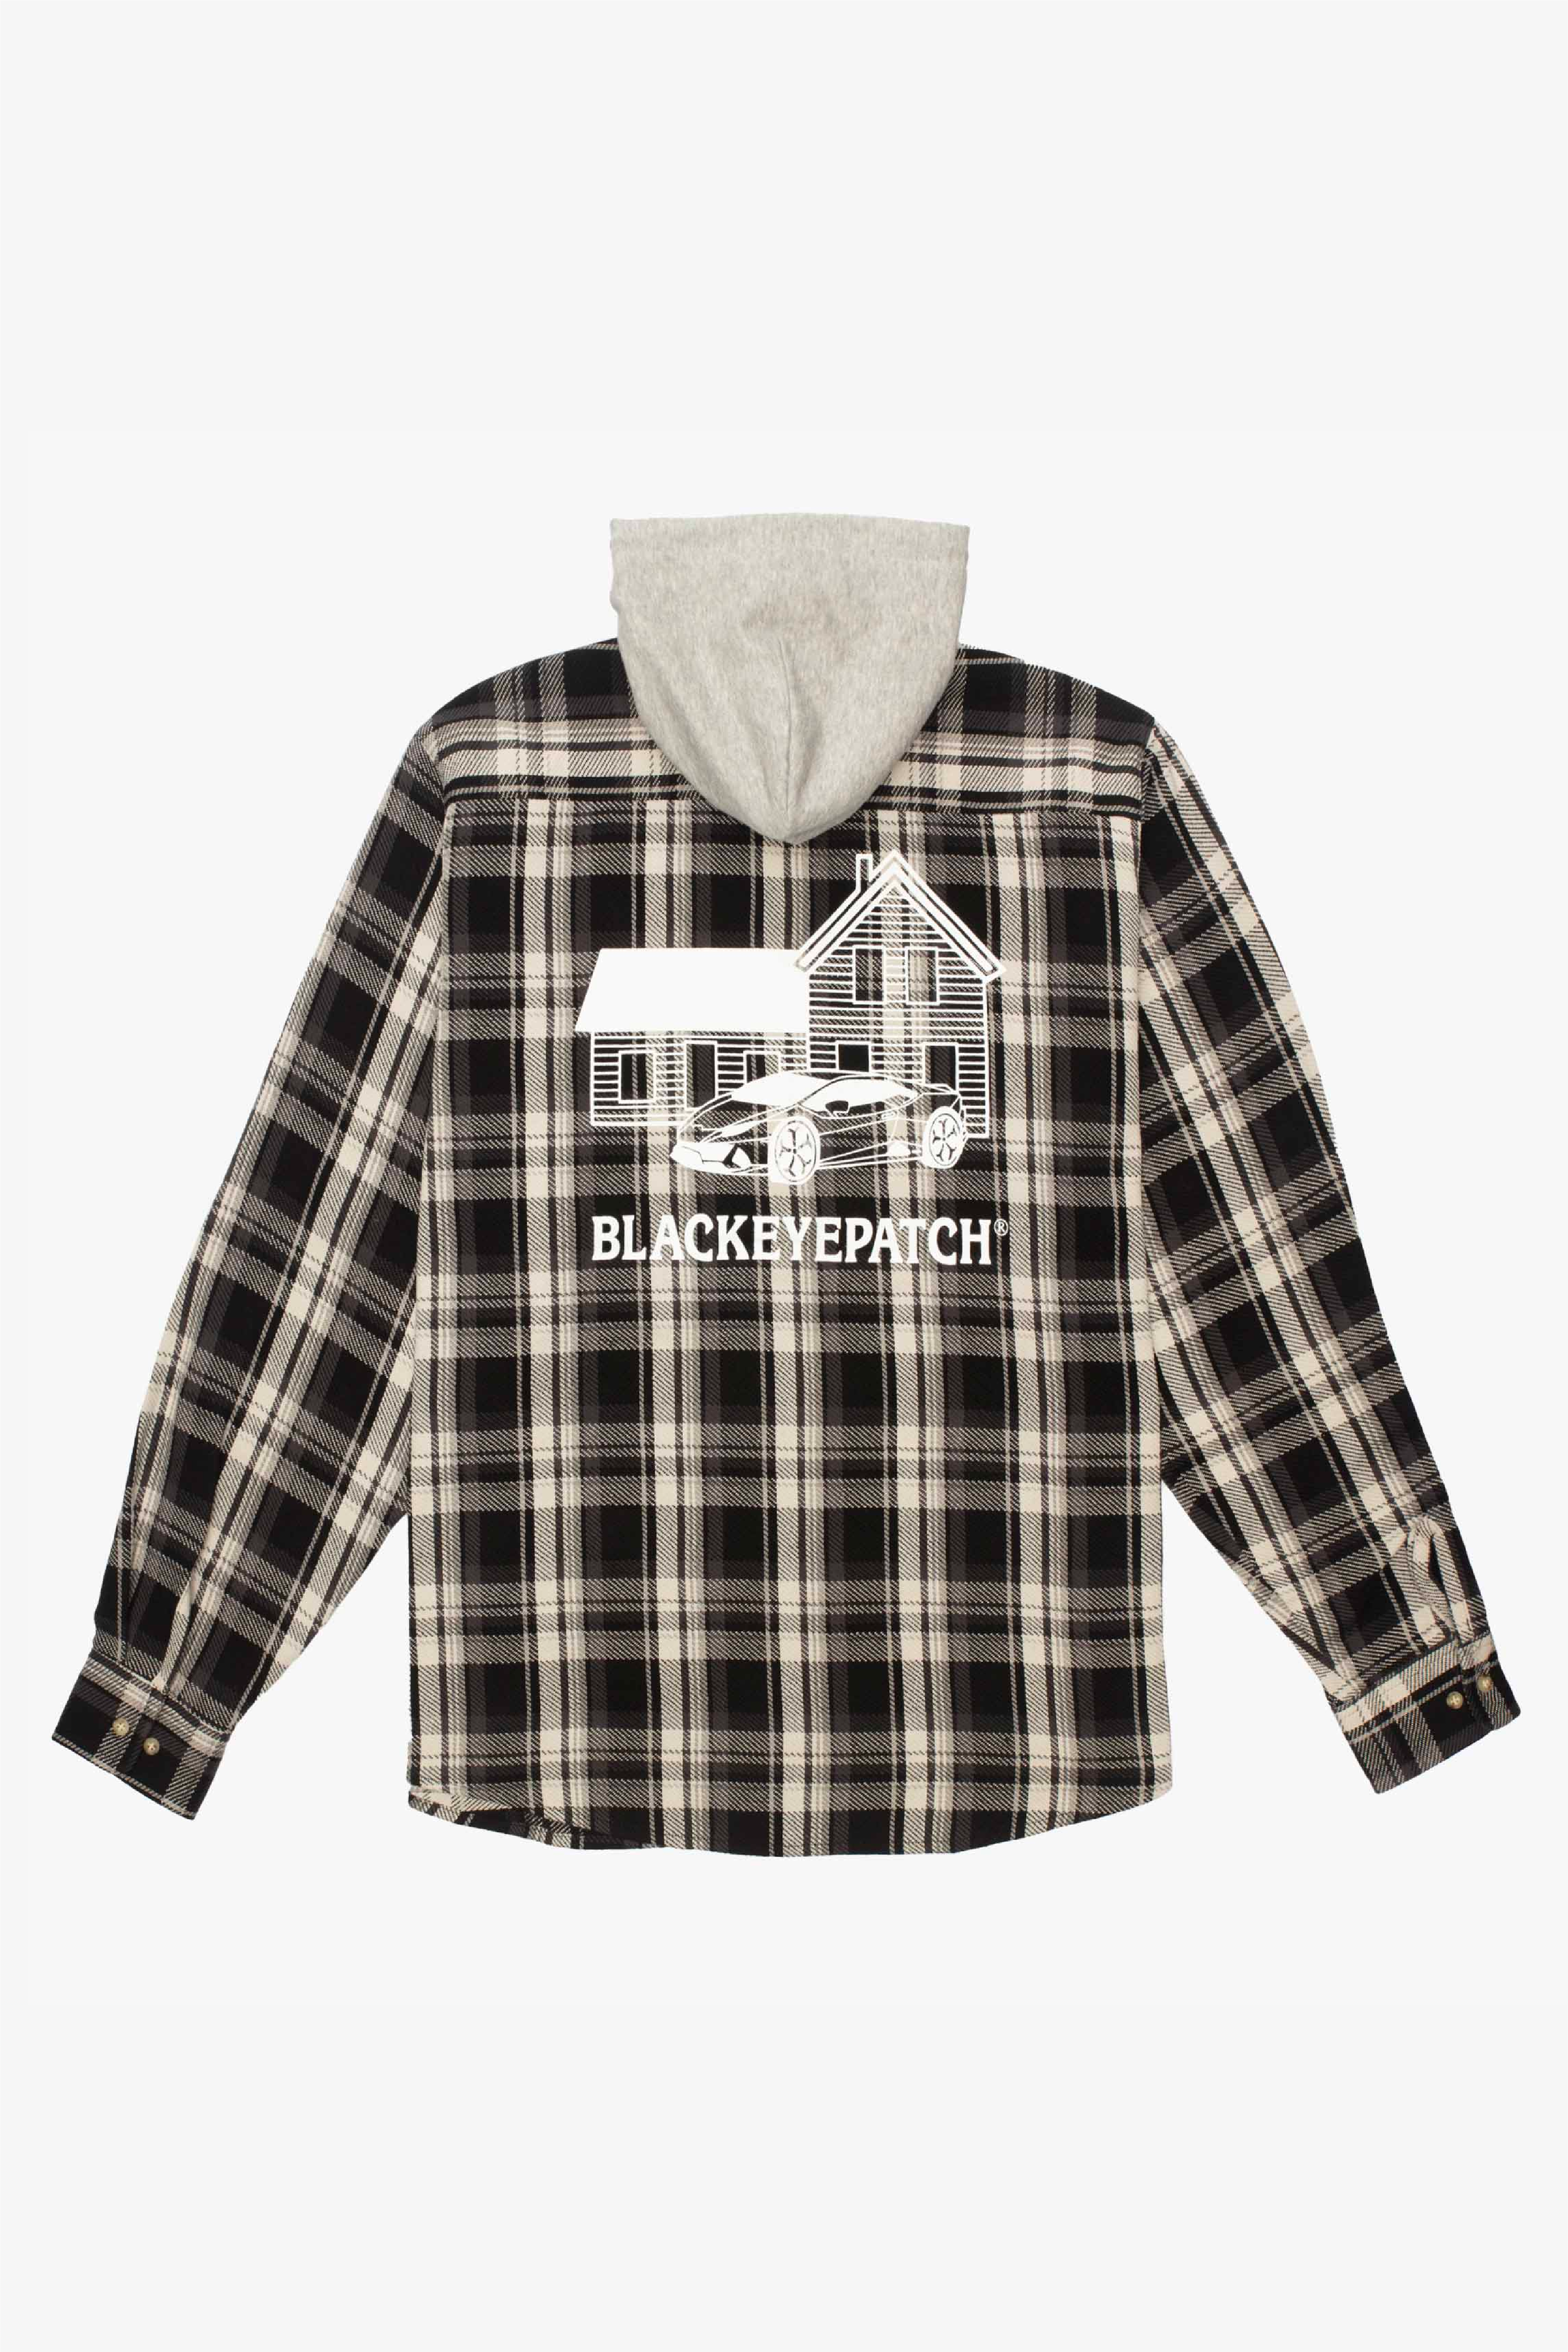 Selectshop FRAME - BLACKEYEPATCH Hooded Flannel Shirt Shirt Dubai